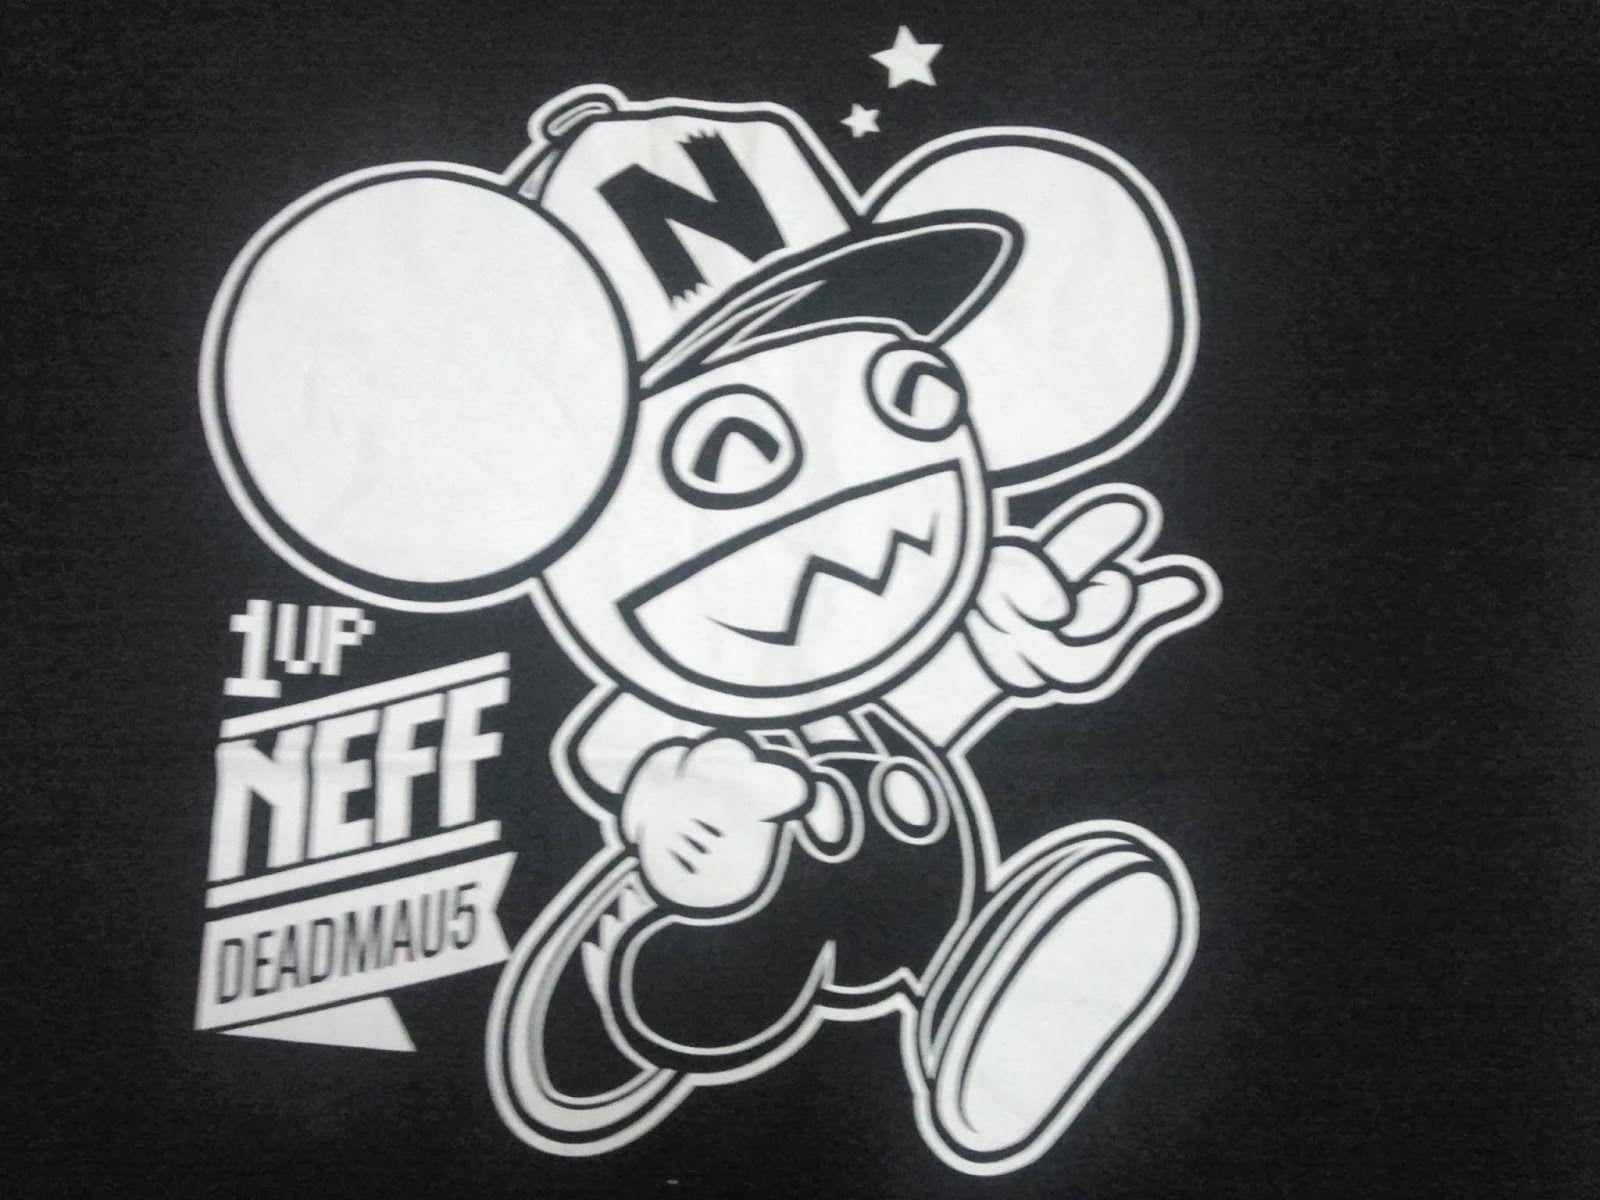 Neff Mau5 Logo - Jerau's Territory X Wishlists: (WL-1855) Deadmau5 1UP By NEFF T-Shirt